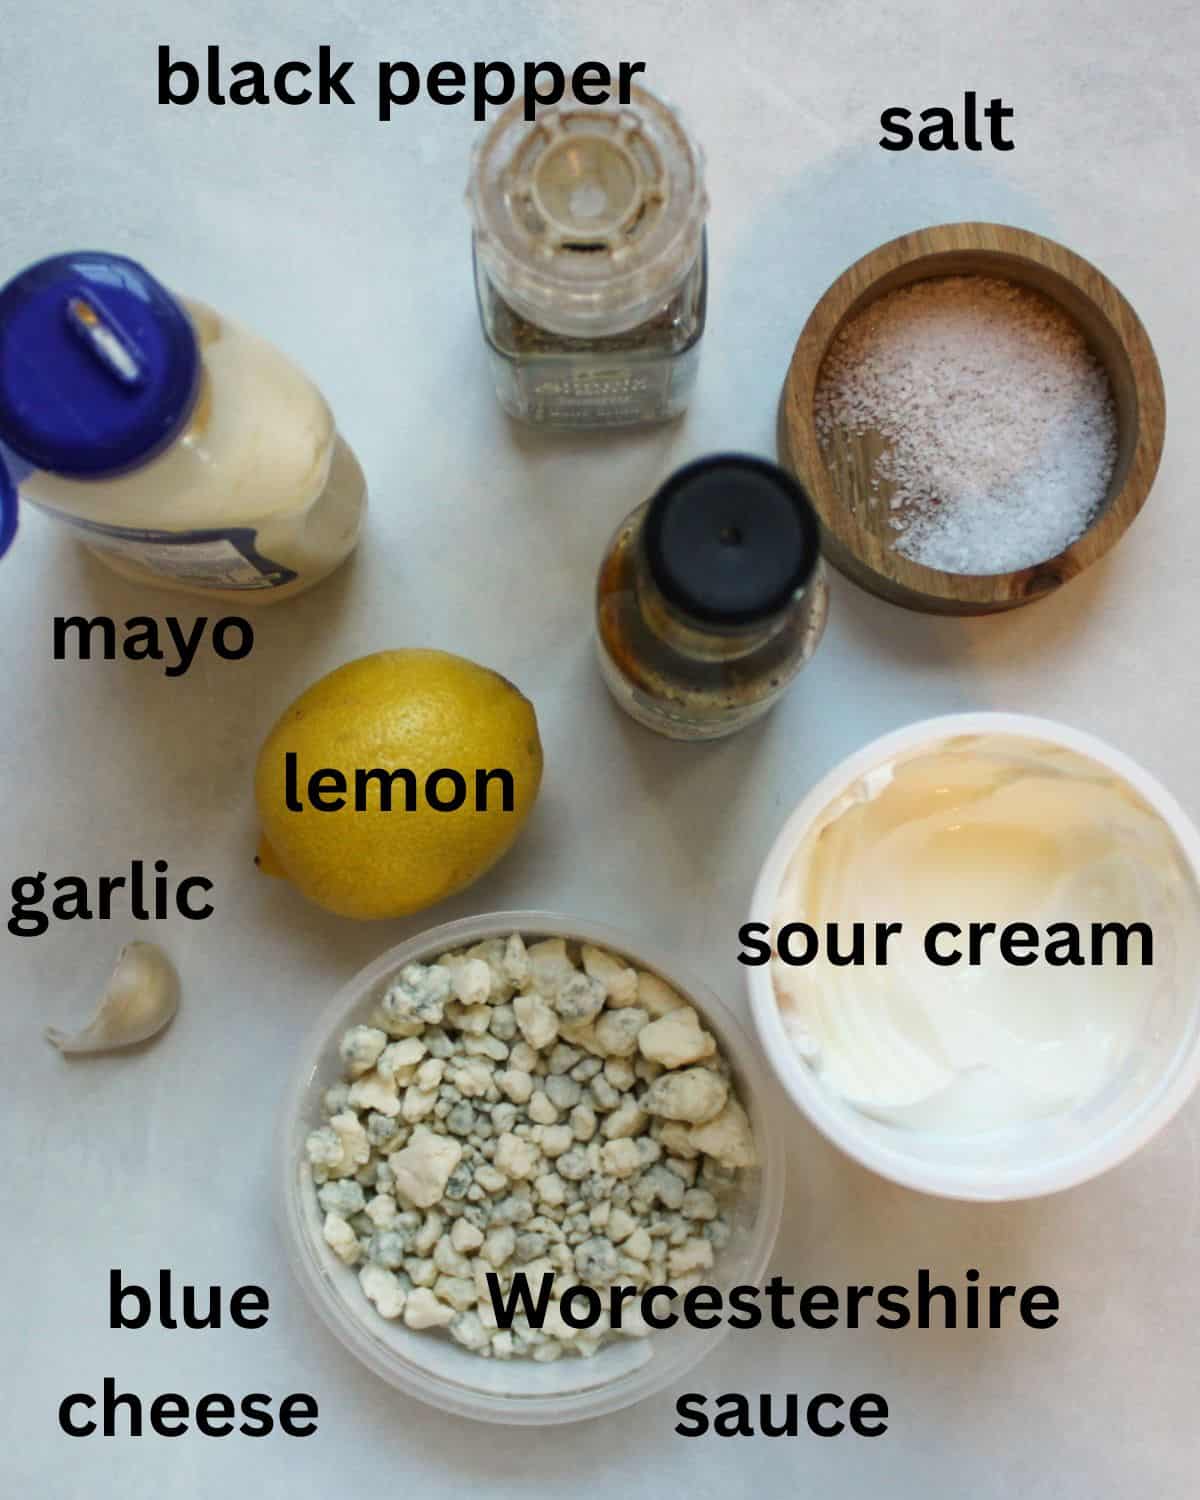 Recipe ingredients labeled as mayo, garlic, lemon, blue cheese, Worcestershire sauce, sour cream, salt.